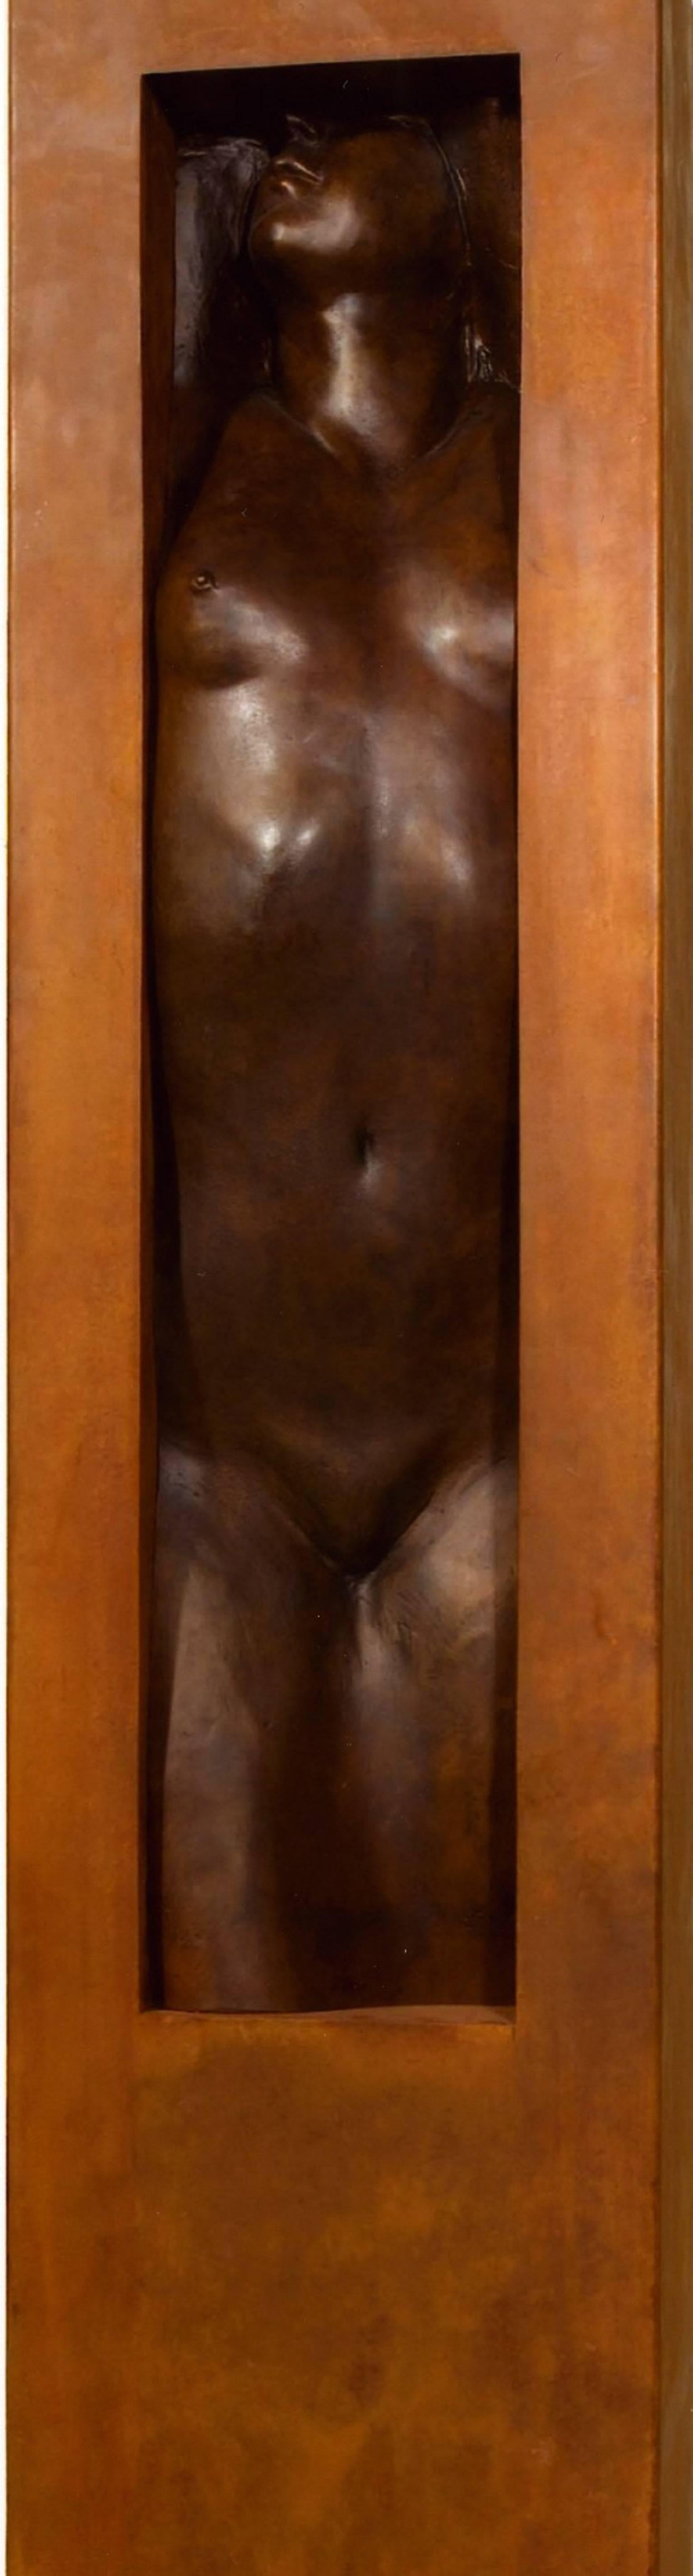 Adam and Eve. Italian school Contemporary bronze sculpture, Nude Man and Woman - Brown Nude Sculpture by Gabriele Garbolino Rù